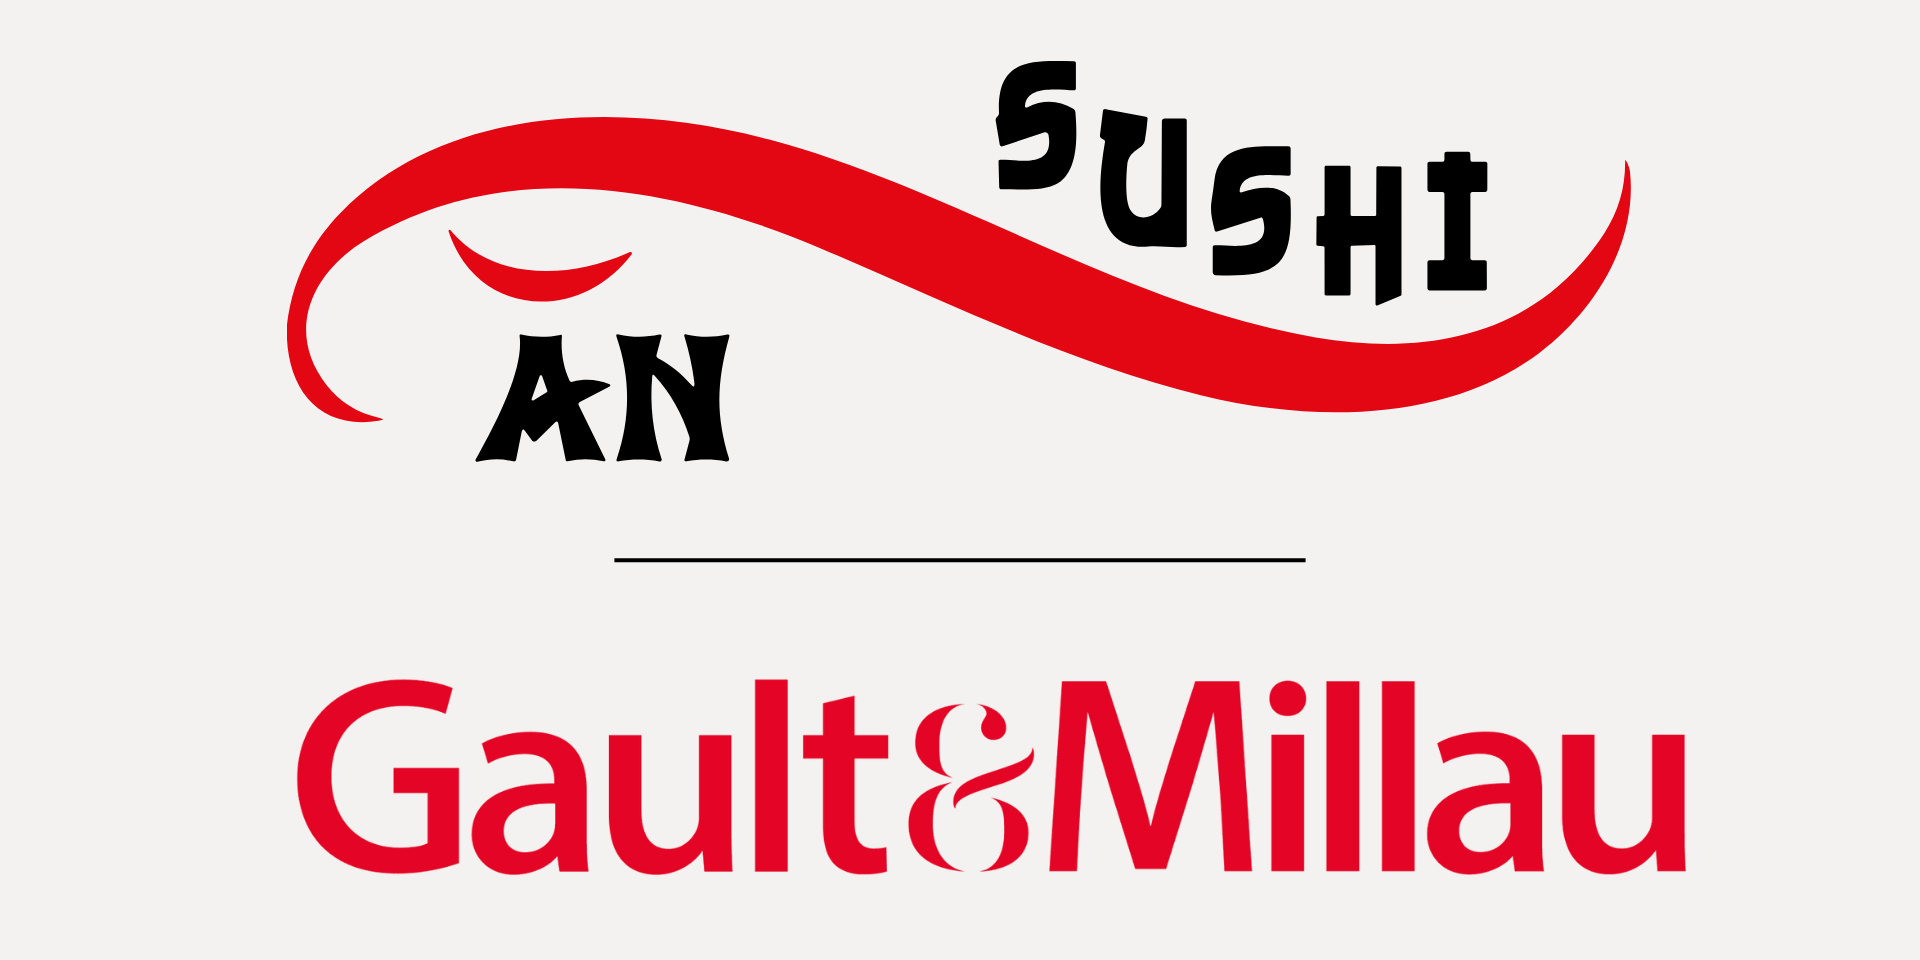 An sushi gault et millau carcassonne